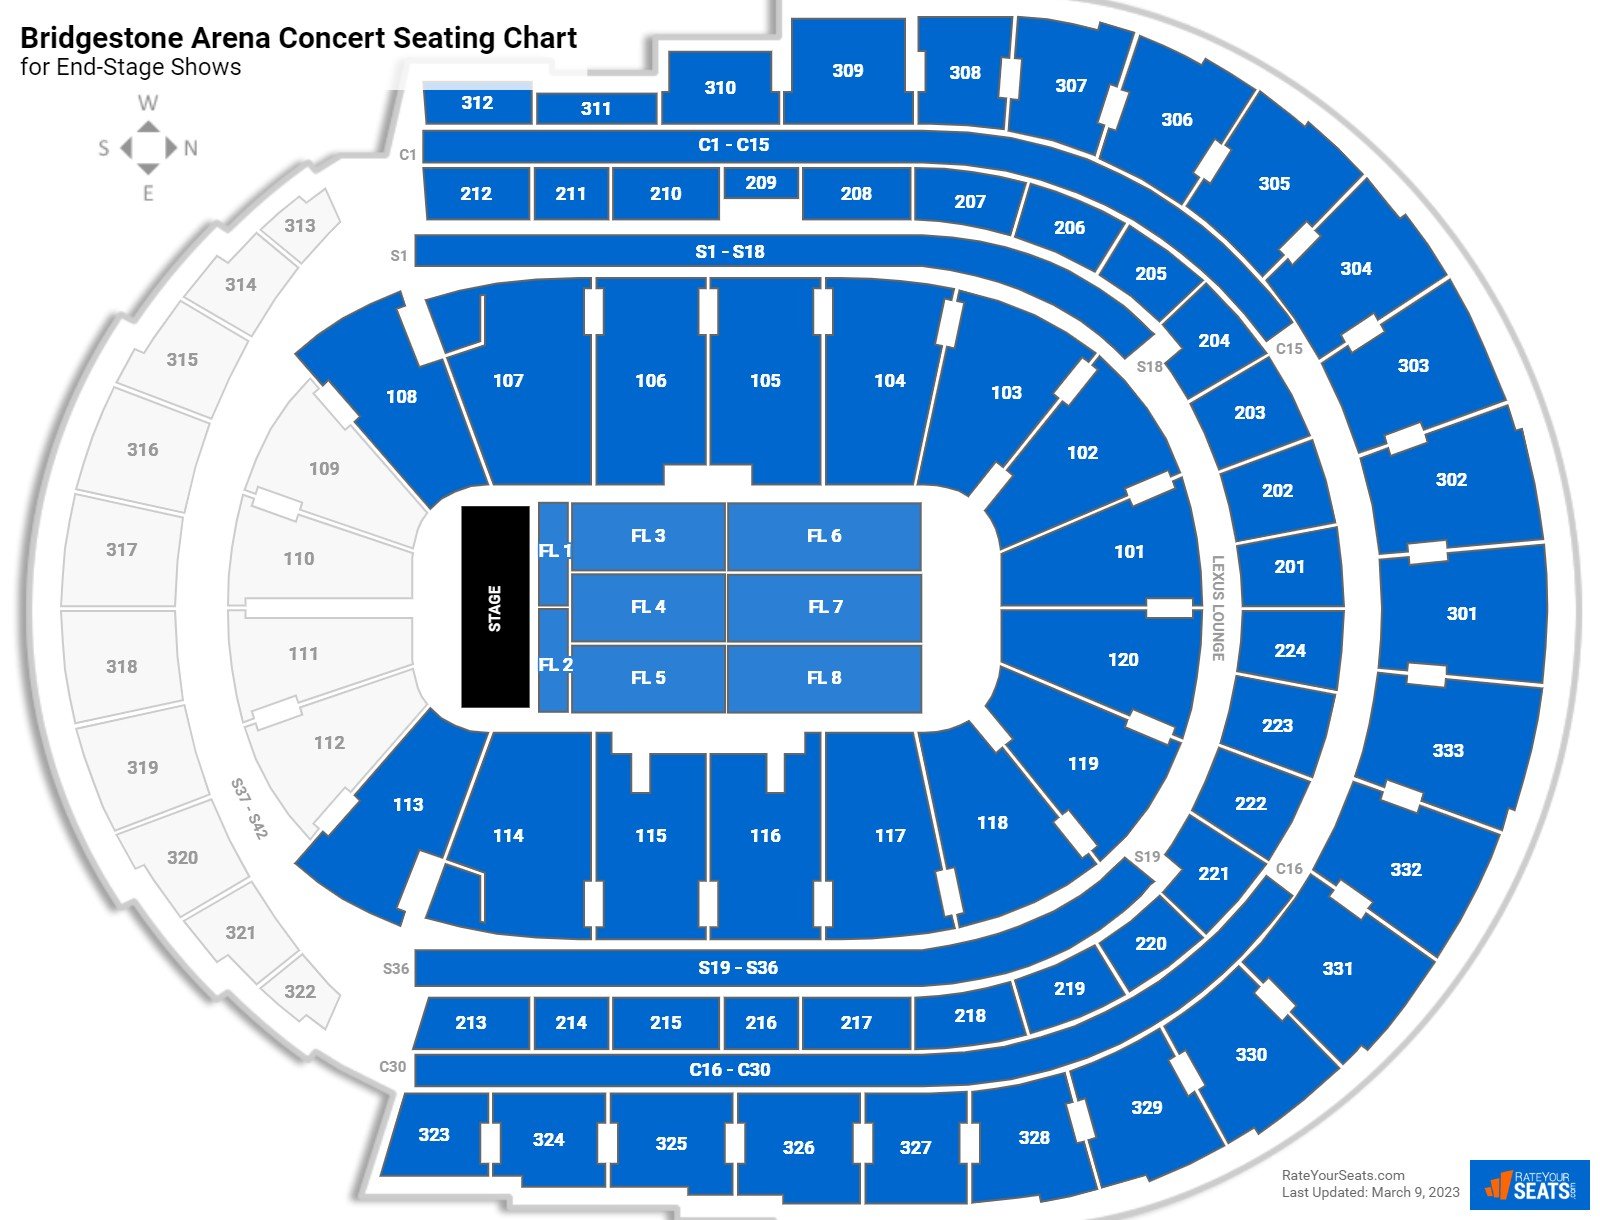 Bridgestone Arena Concert Seating Chart